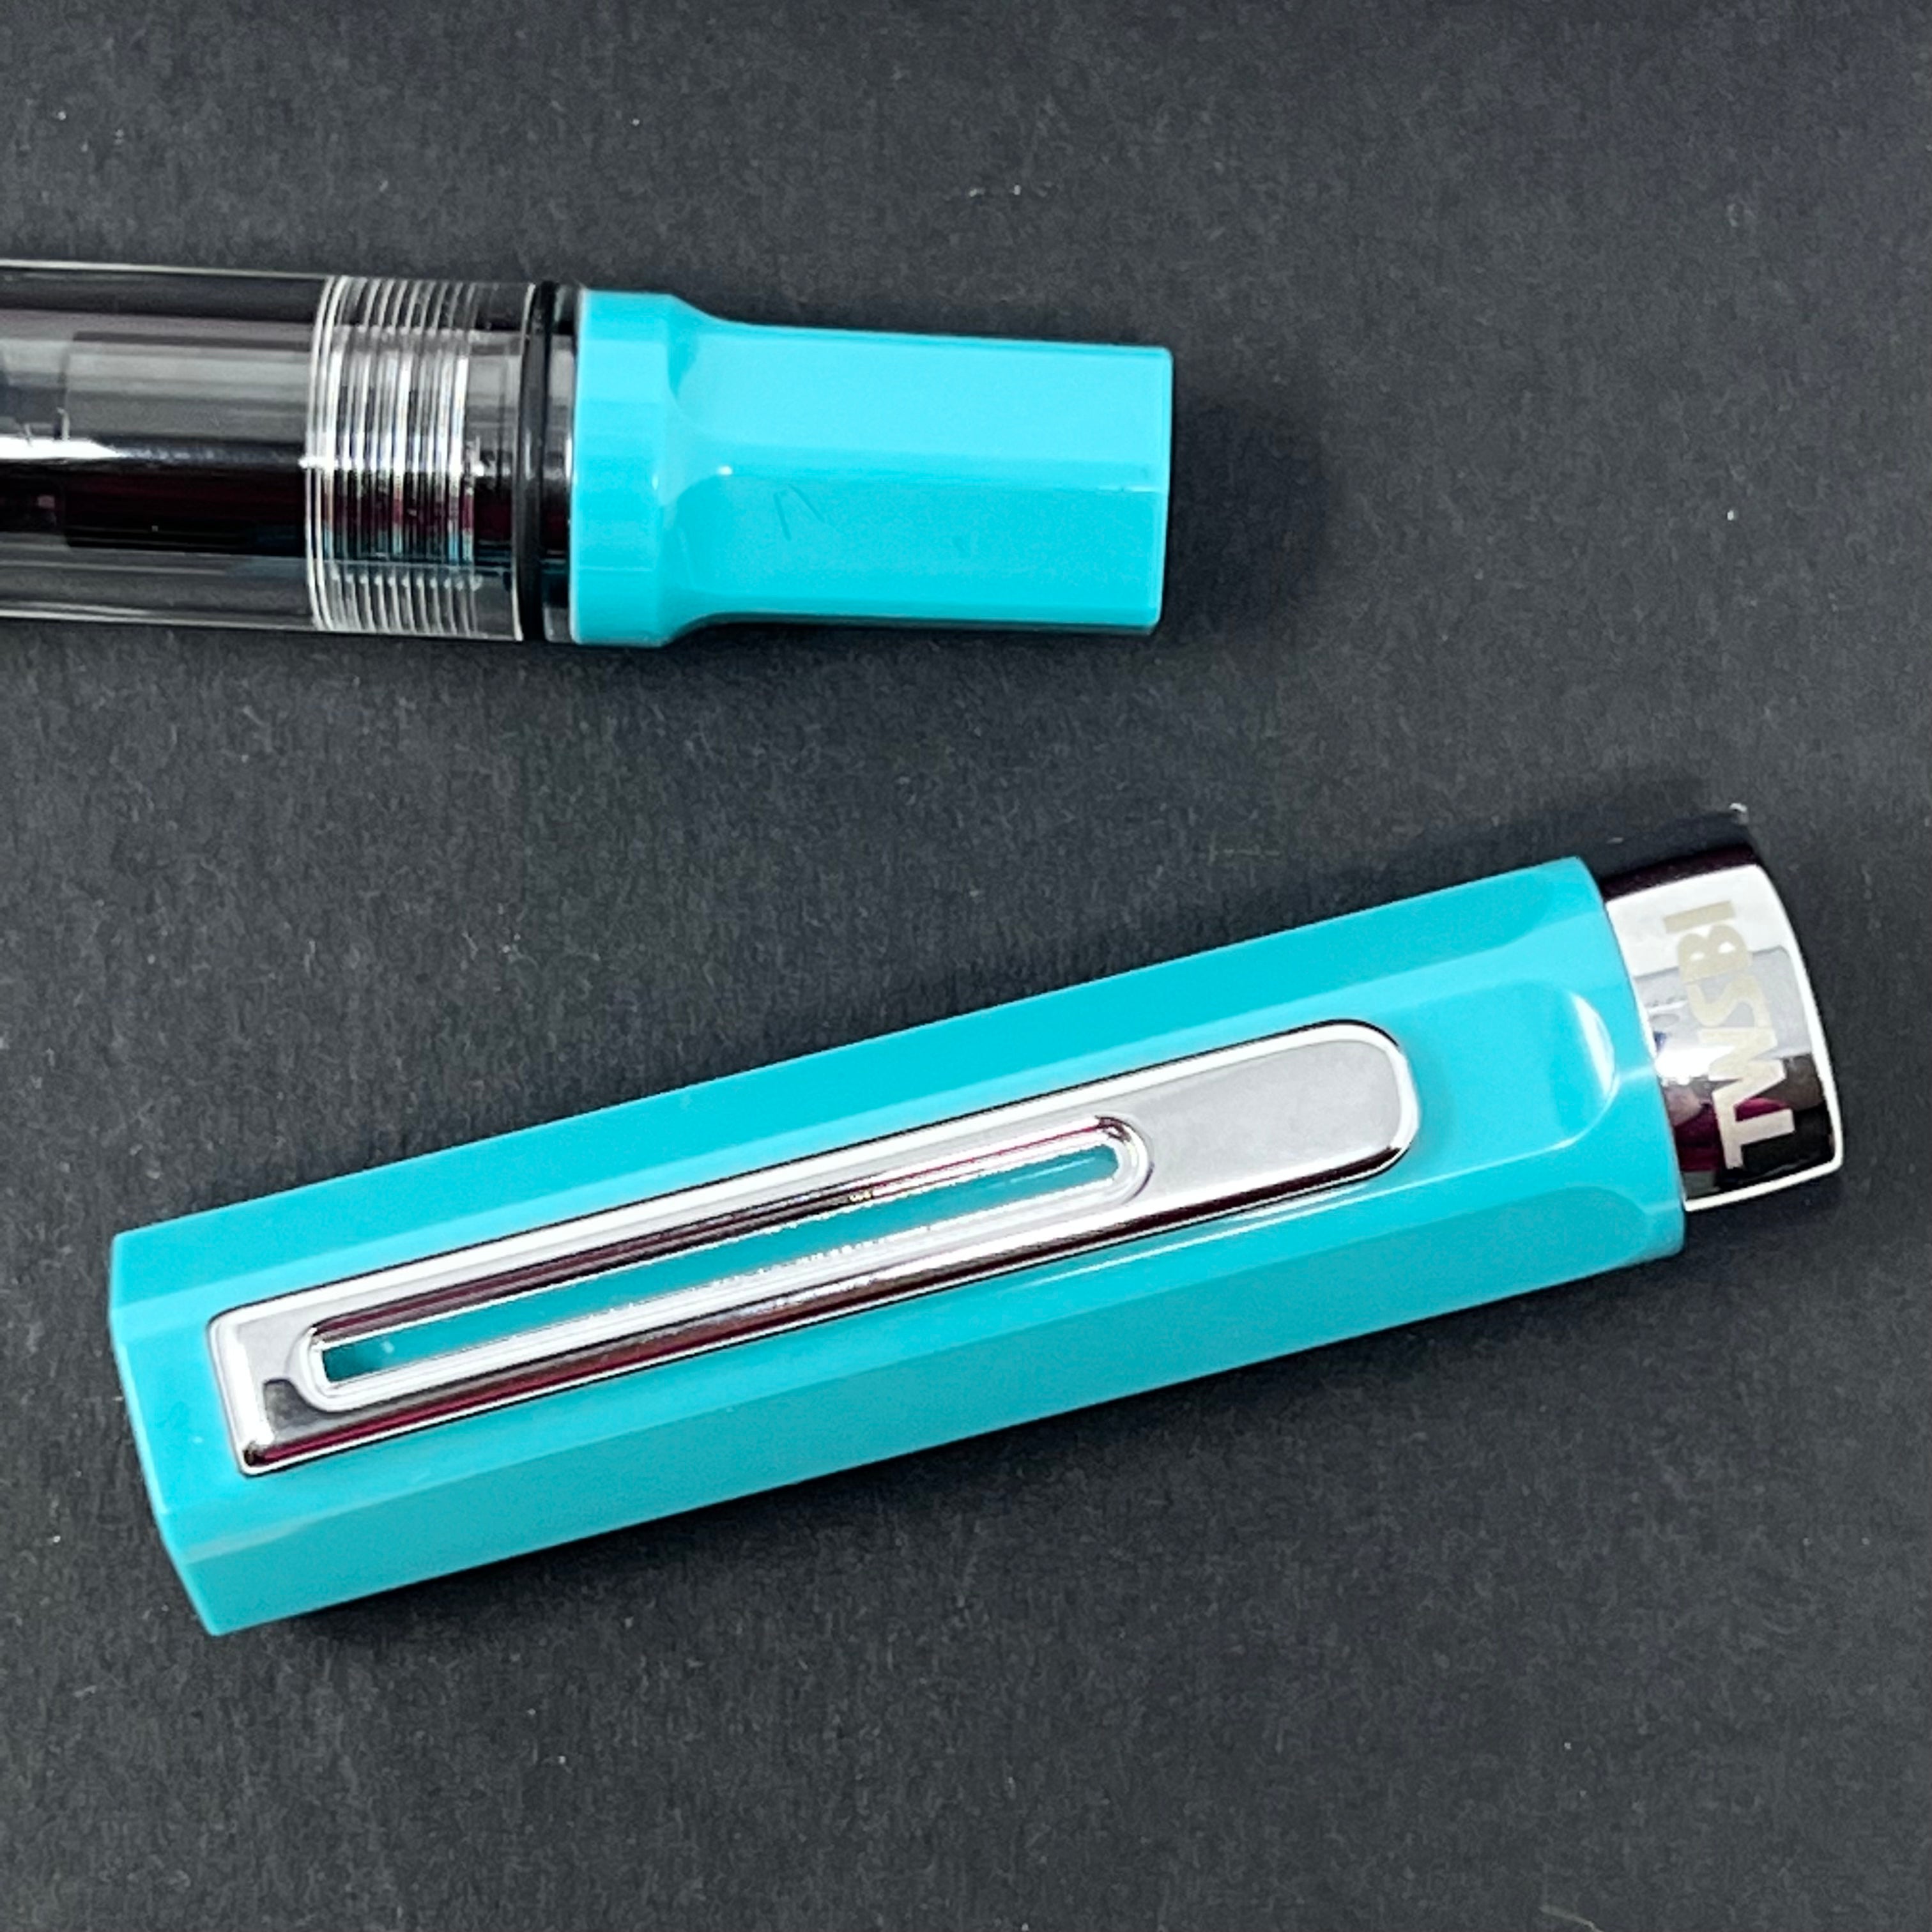 TWSBI Eco Fountain Pen - Glow Green - Extra-Fine